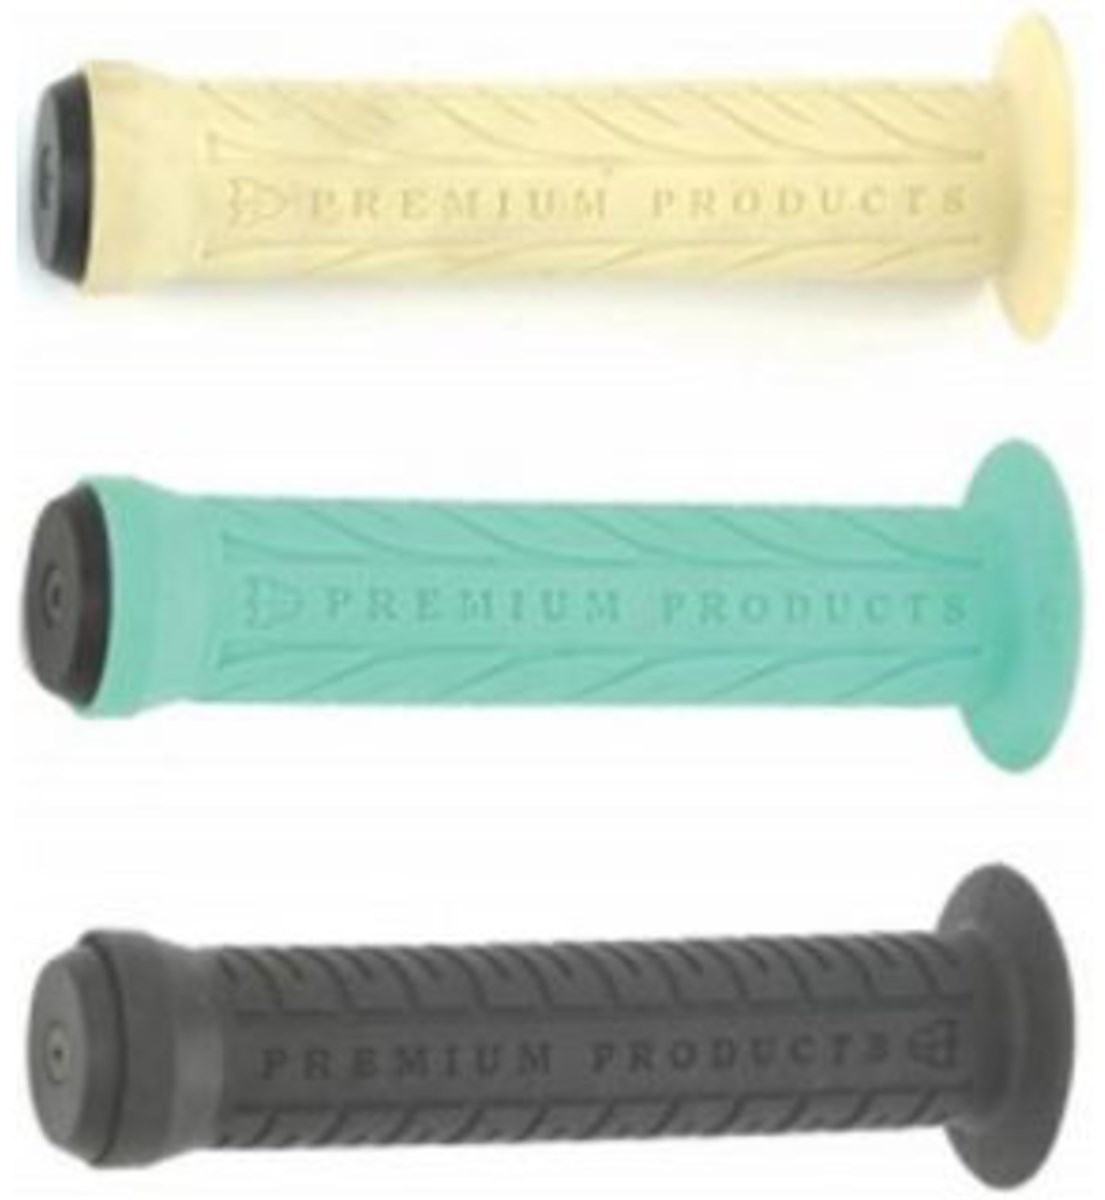 Premium Products Tread BMX Grip product image